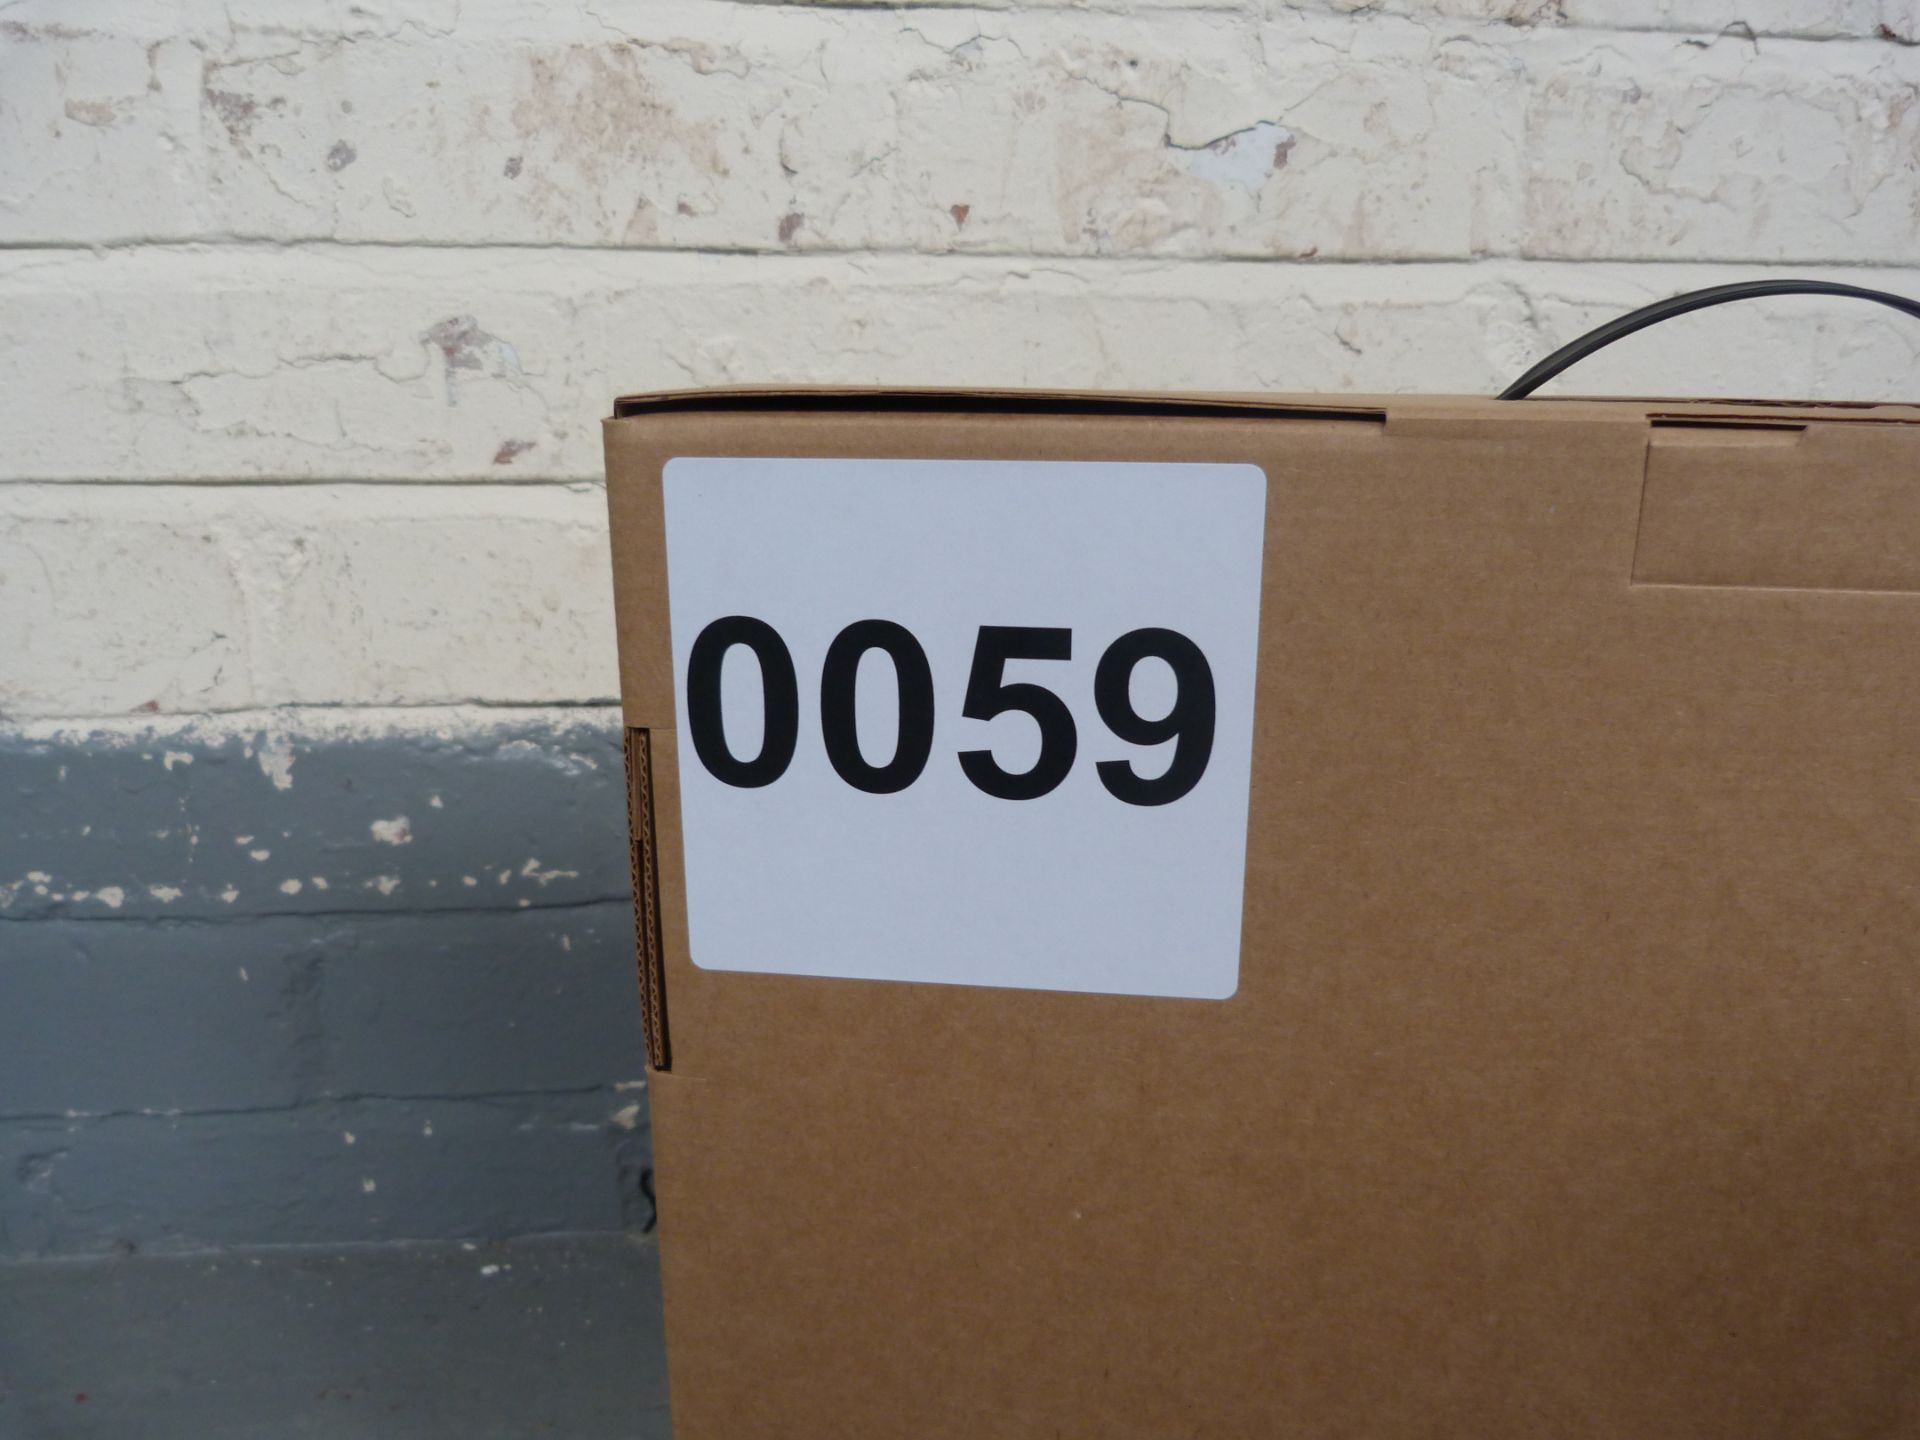 Sennheiser EW 300 G4-BASE SK-RC-GBW Bodypack Base Set 507696. In Cardboard. Serial No: 8178661169 - Image 3 of 5